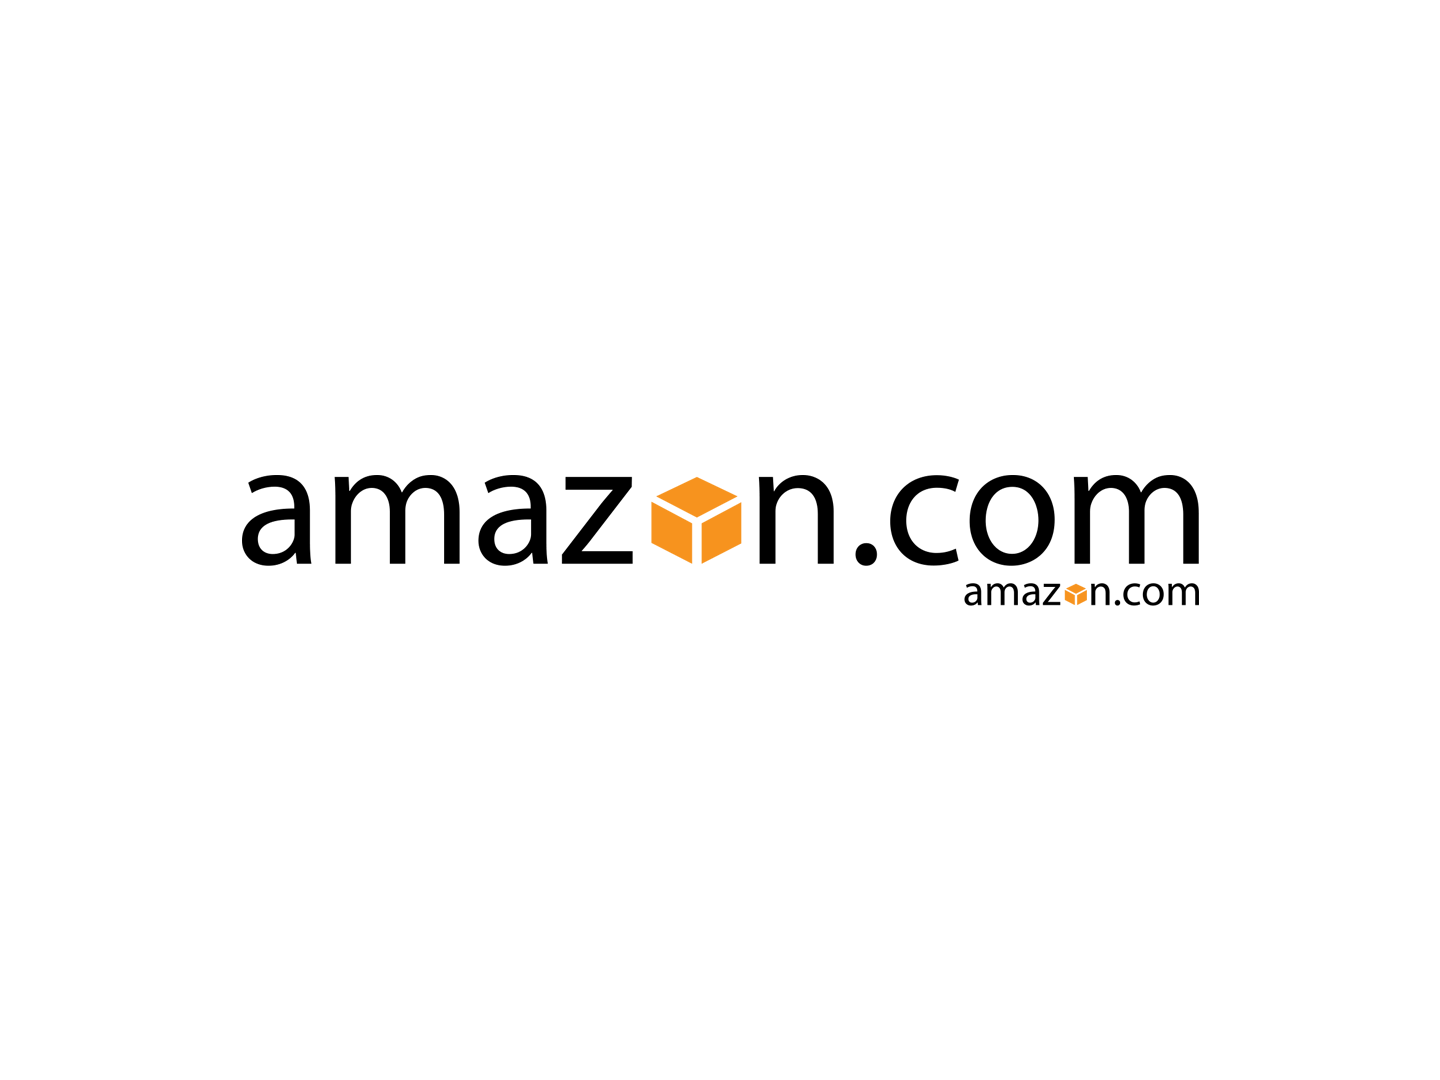 Connor Logo - Amazon Logo by Connor Ryan on Dribbble